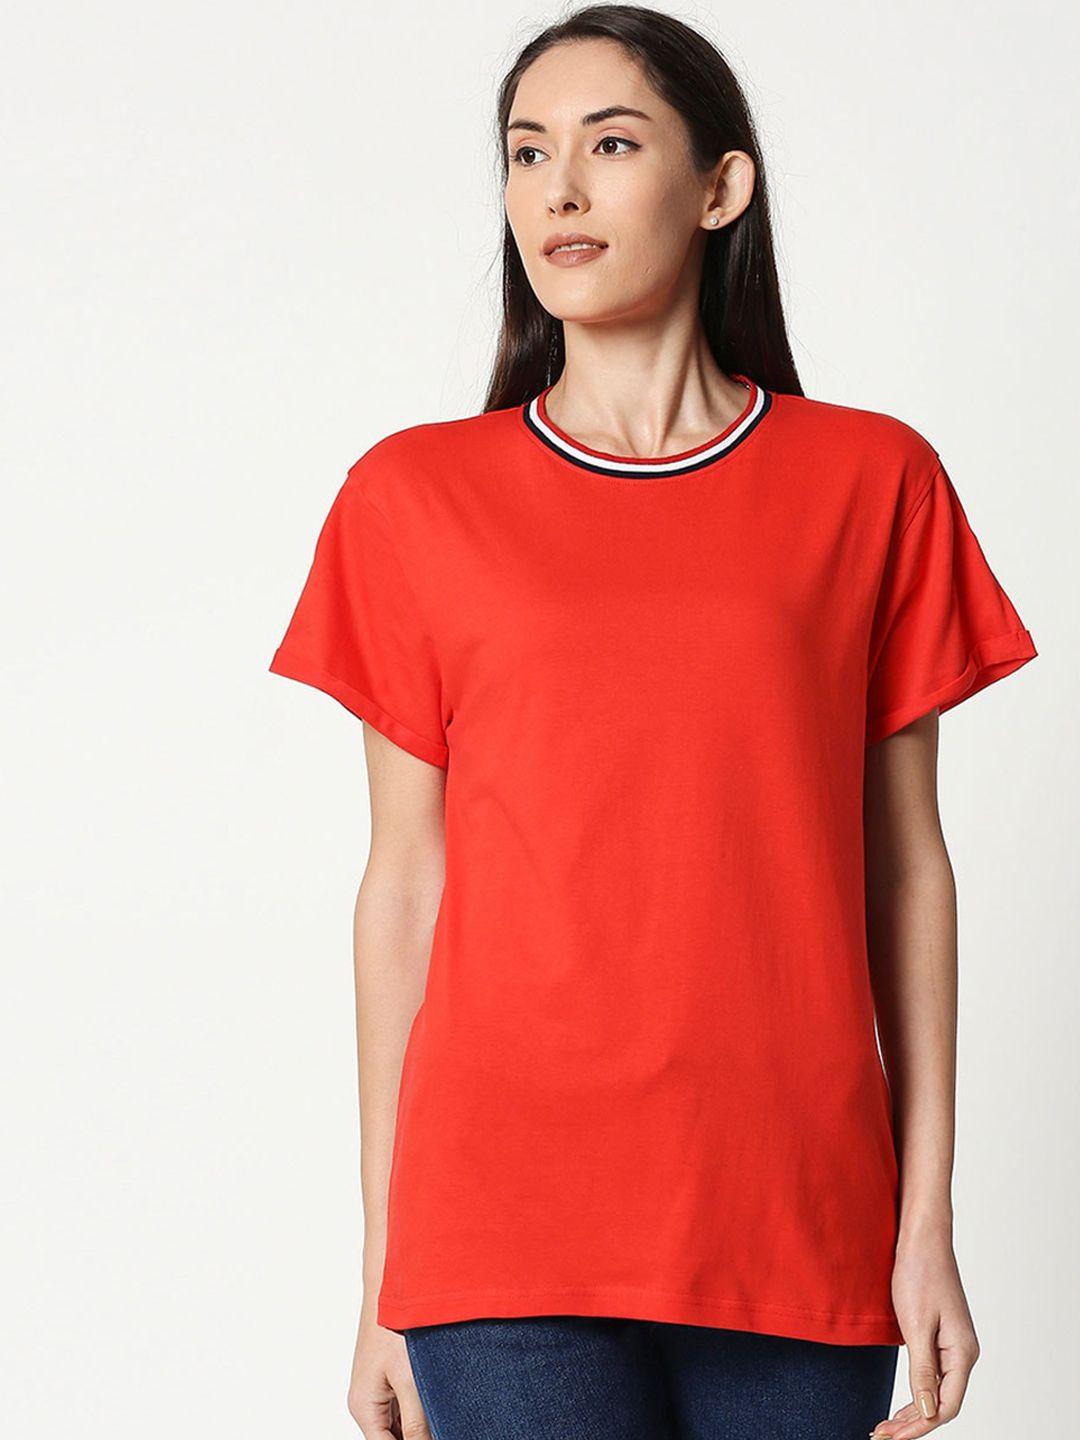 bewakoof-women-red-solid-round-neck-t-shirt